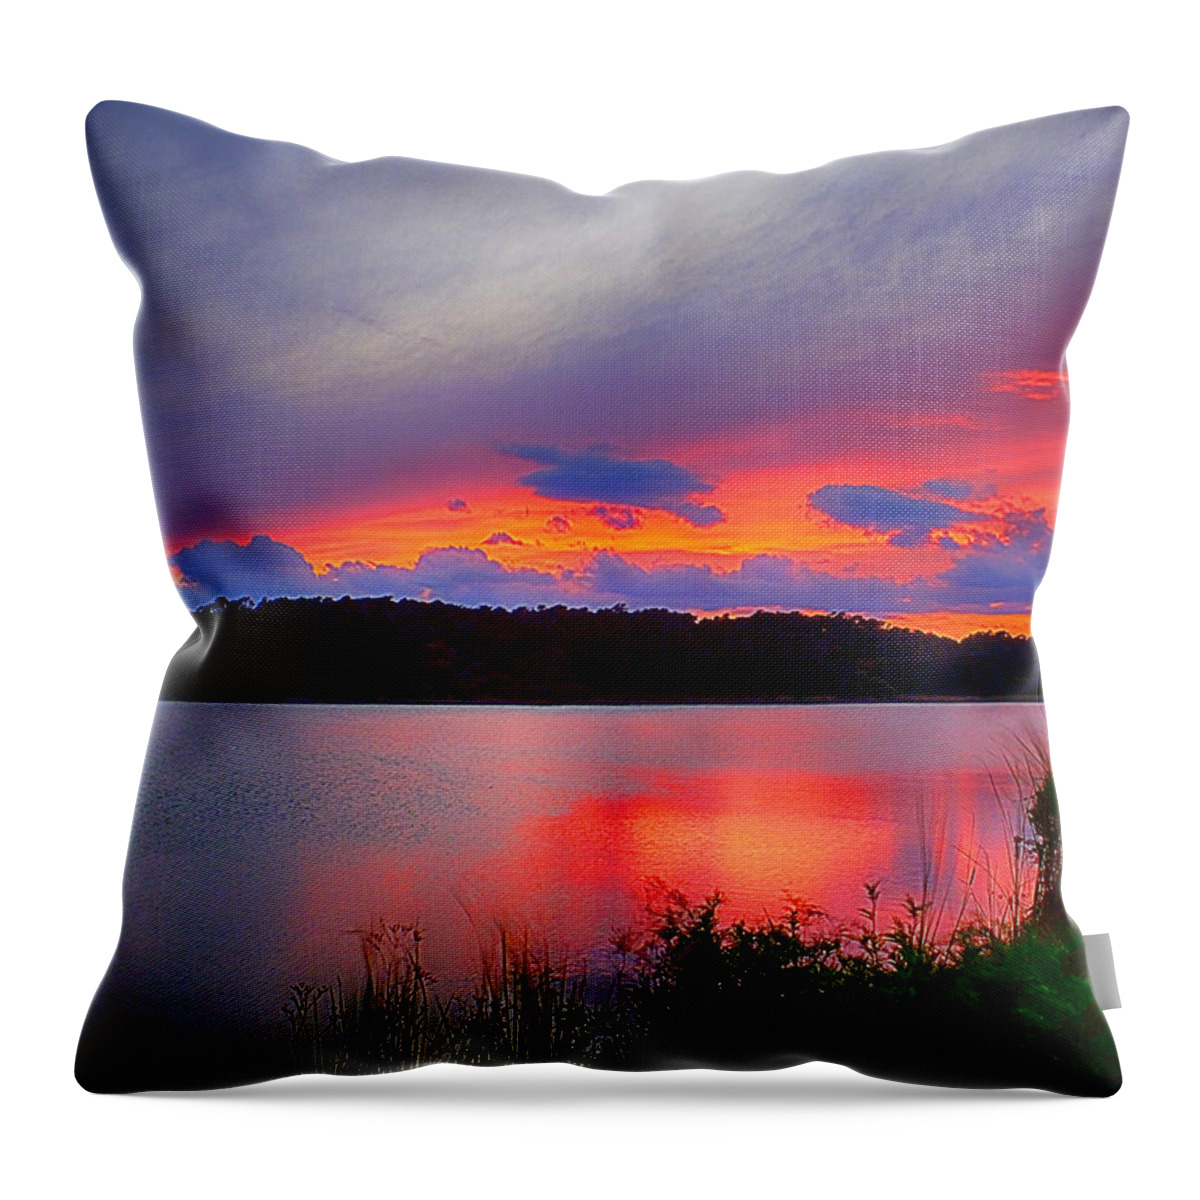 Sunset Throw Pillow featuring the photograph Shelf Cloud at Sunset by Bill Barber